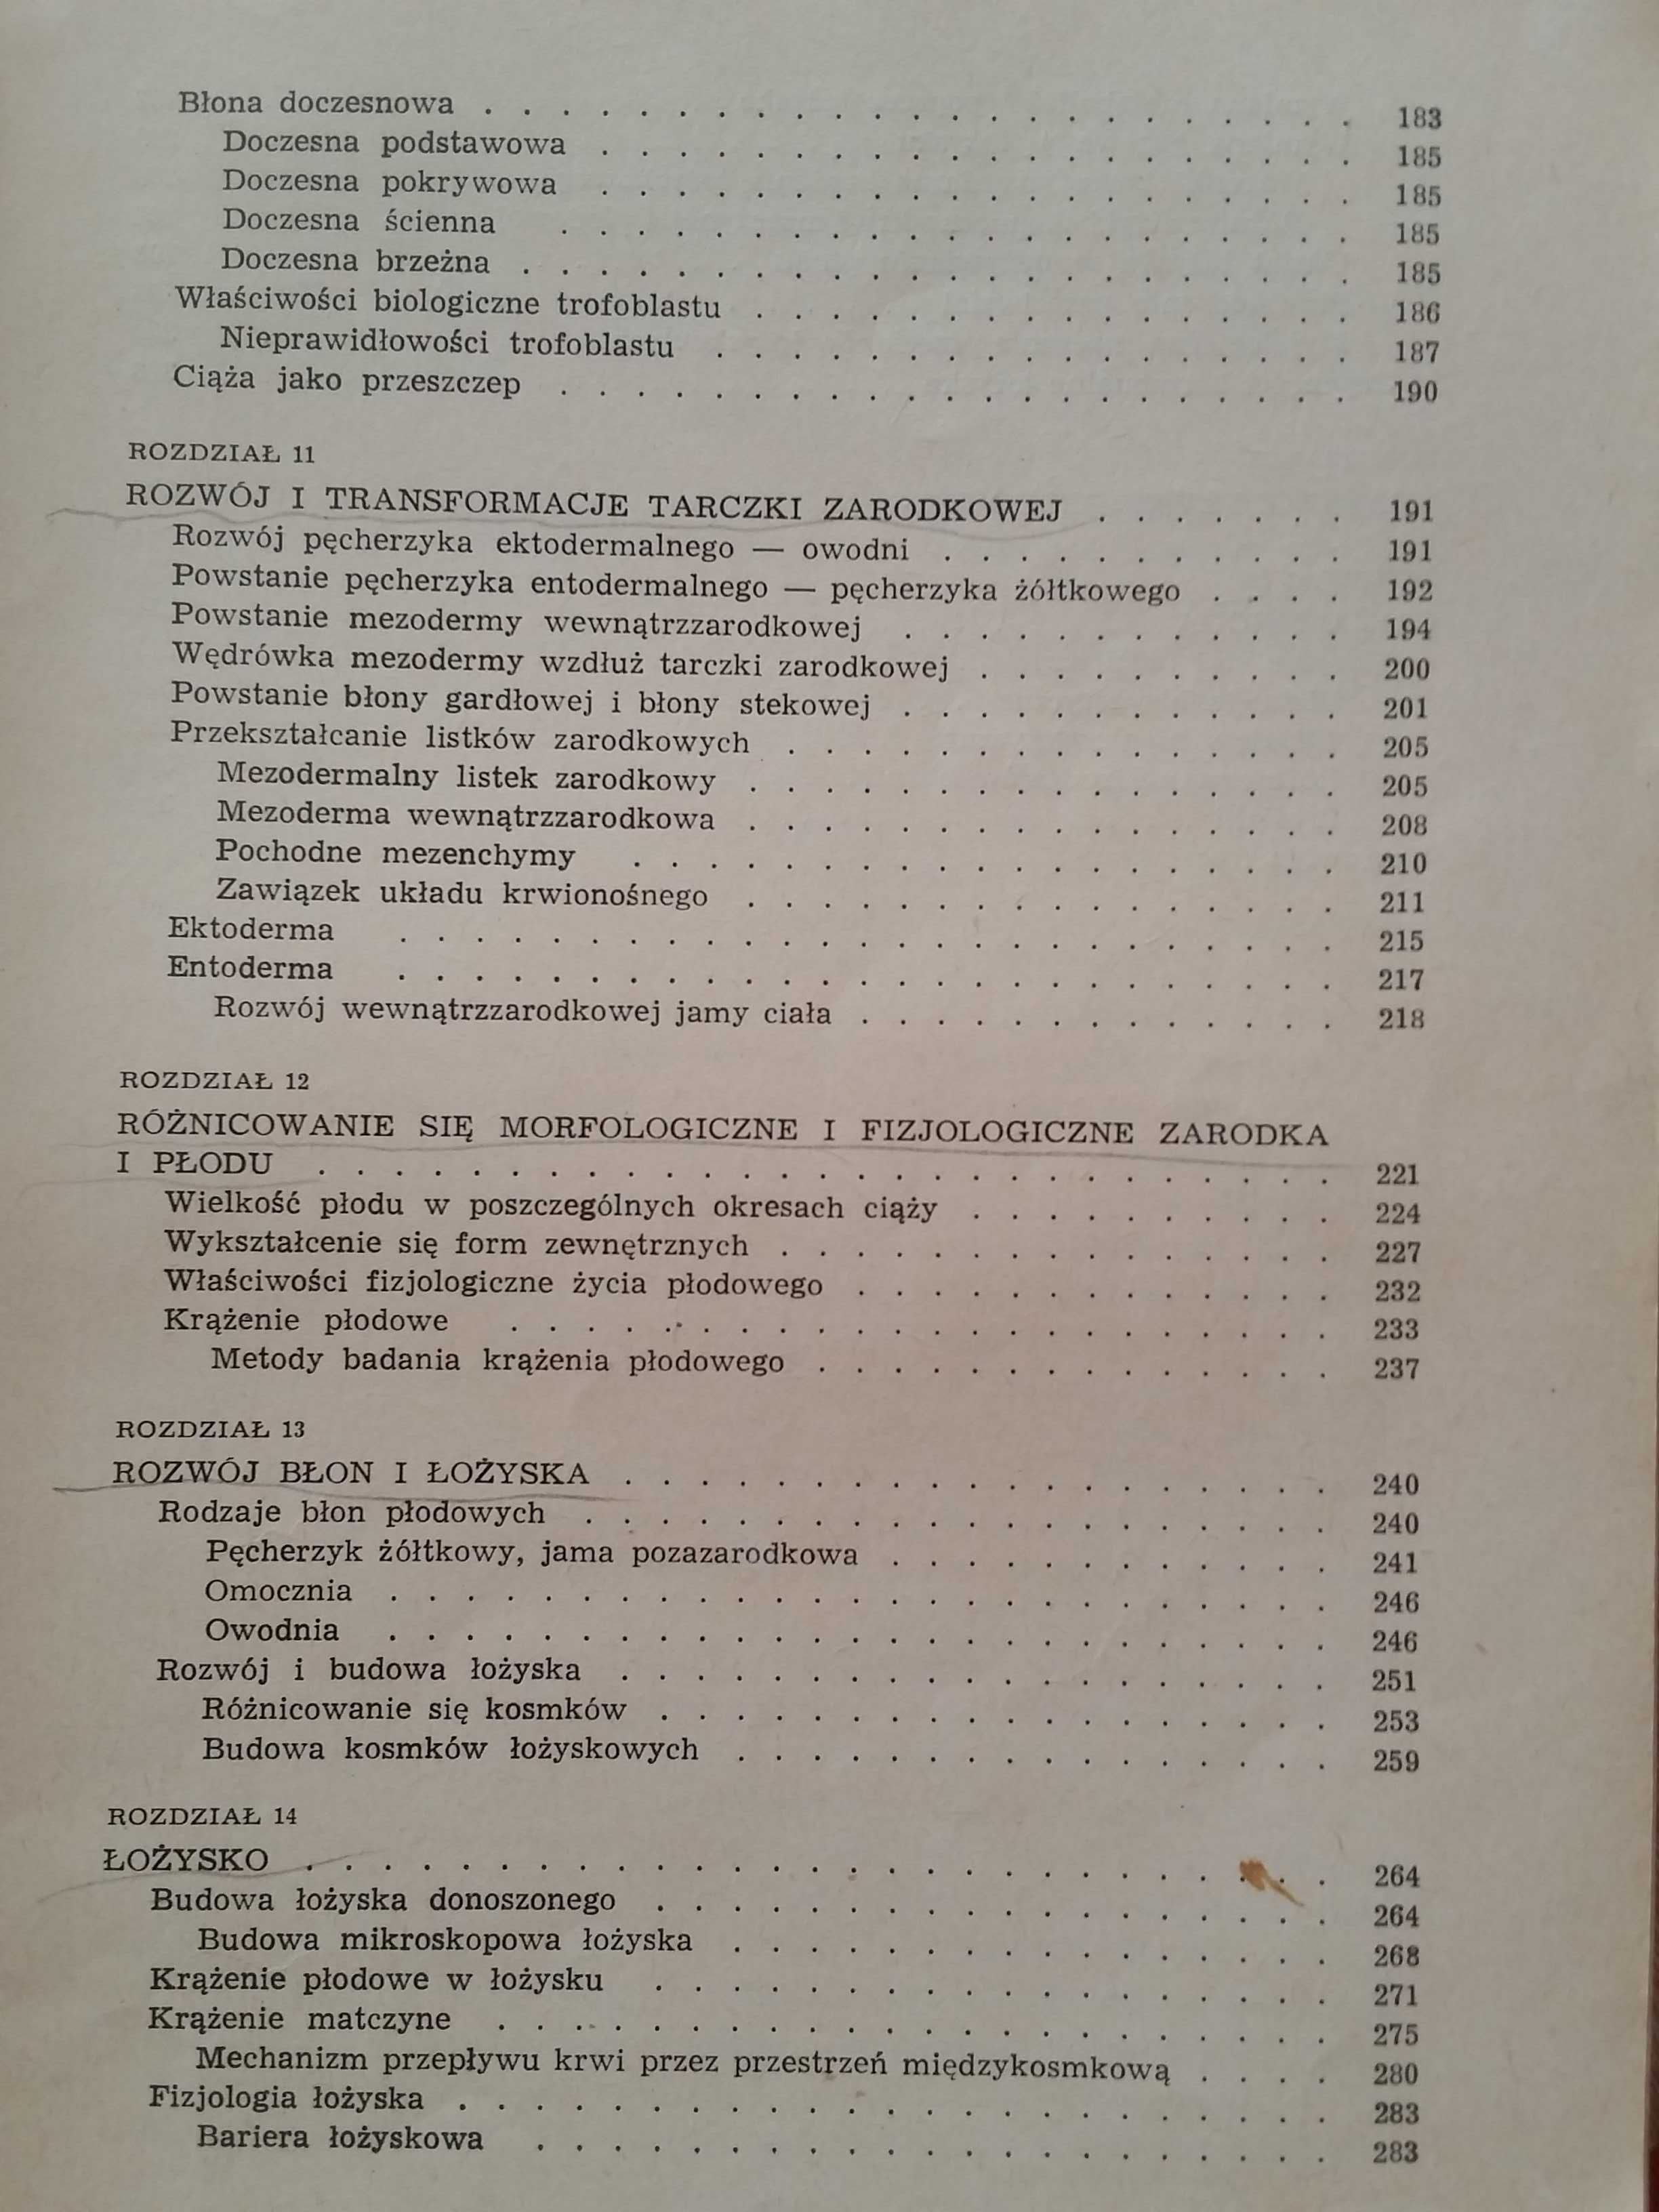 Embriologia ogólna biologia medycyna studia 1972